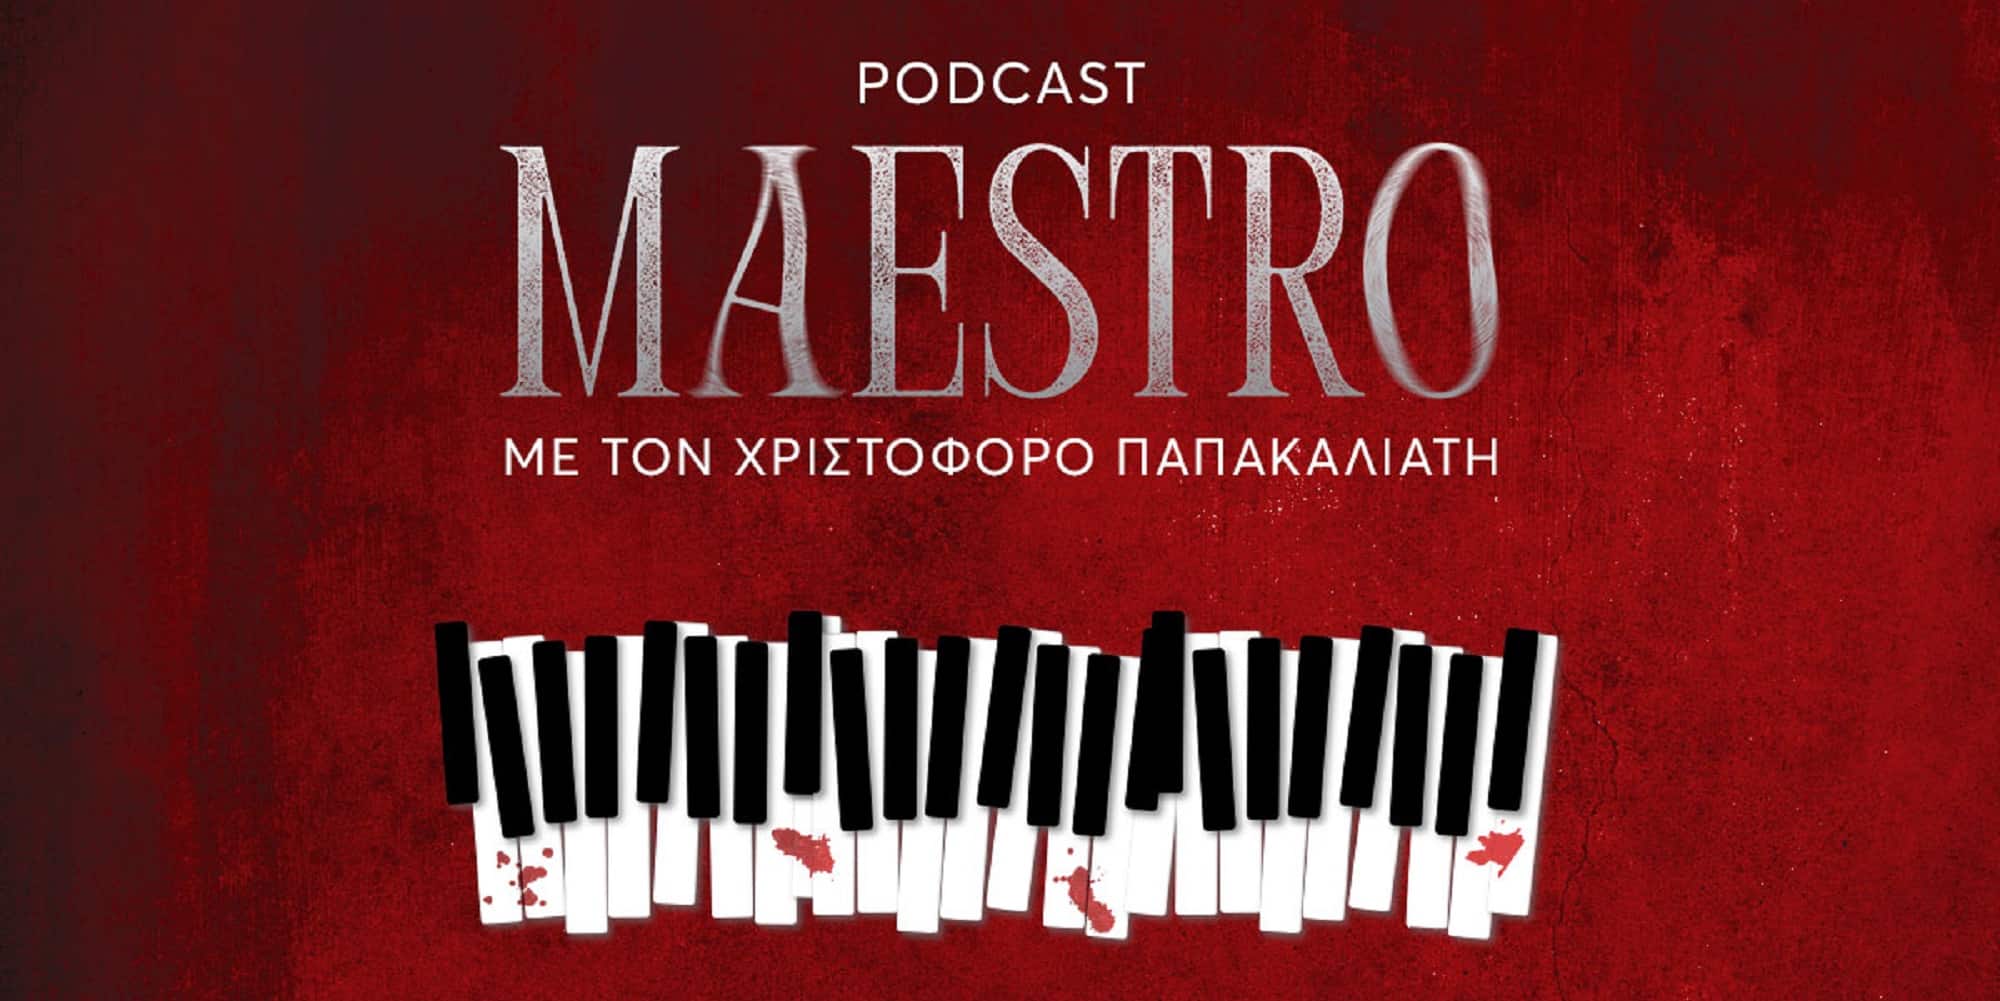 Podcast για τη σειρά Maestro ετοιμάζει ο Χριστόφορος Παπακαλιάτης